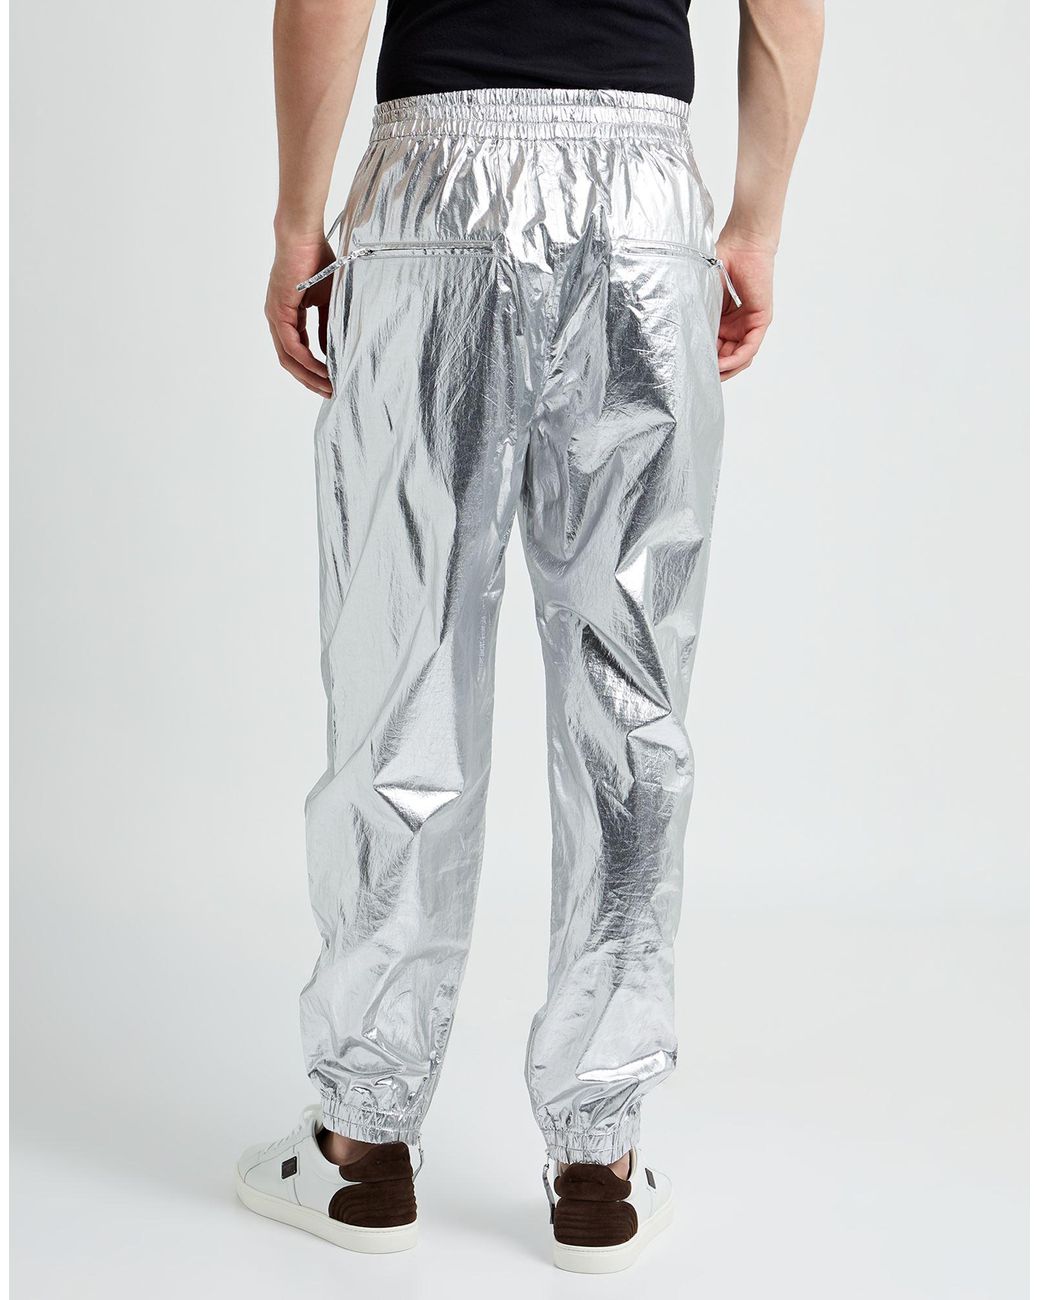 COOFANDY Mens Metallic Shiny Jeans Party Dance Disco Nightclub Pants  Straight Leg Trousers  Amazonin Clothing  Accessories